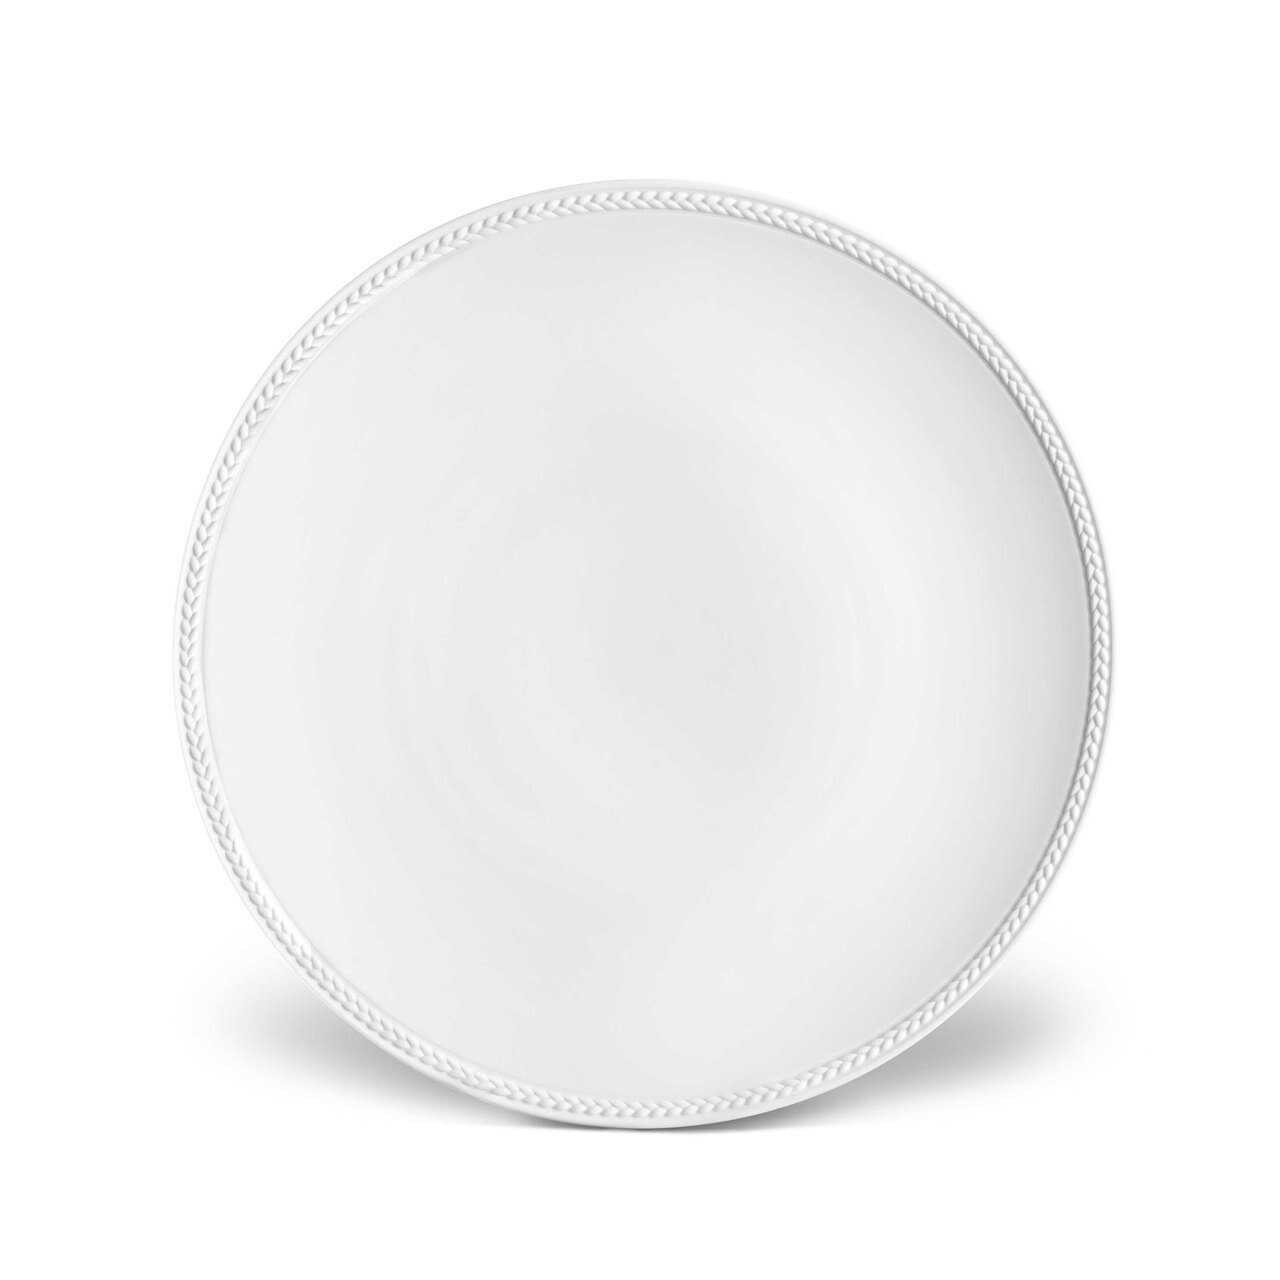 L'Objet Soie Tressee Dinner Plate White